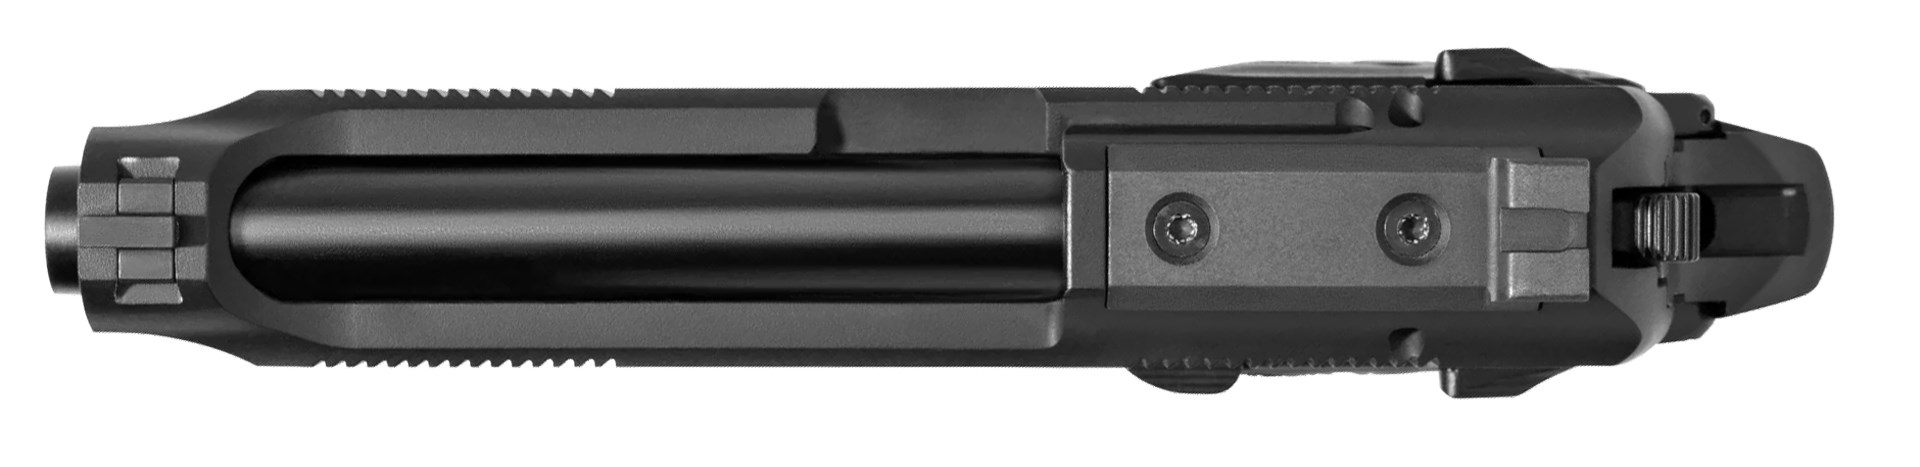 Beretta 80X Cheetah top view of slide barrel gun parts optic plate sights black metal aluminum steel